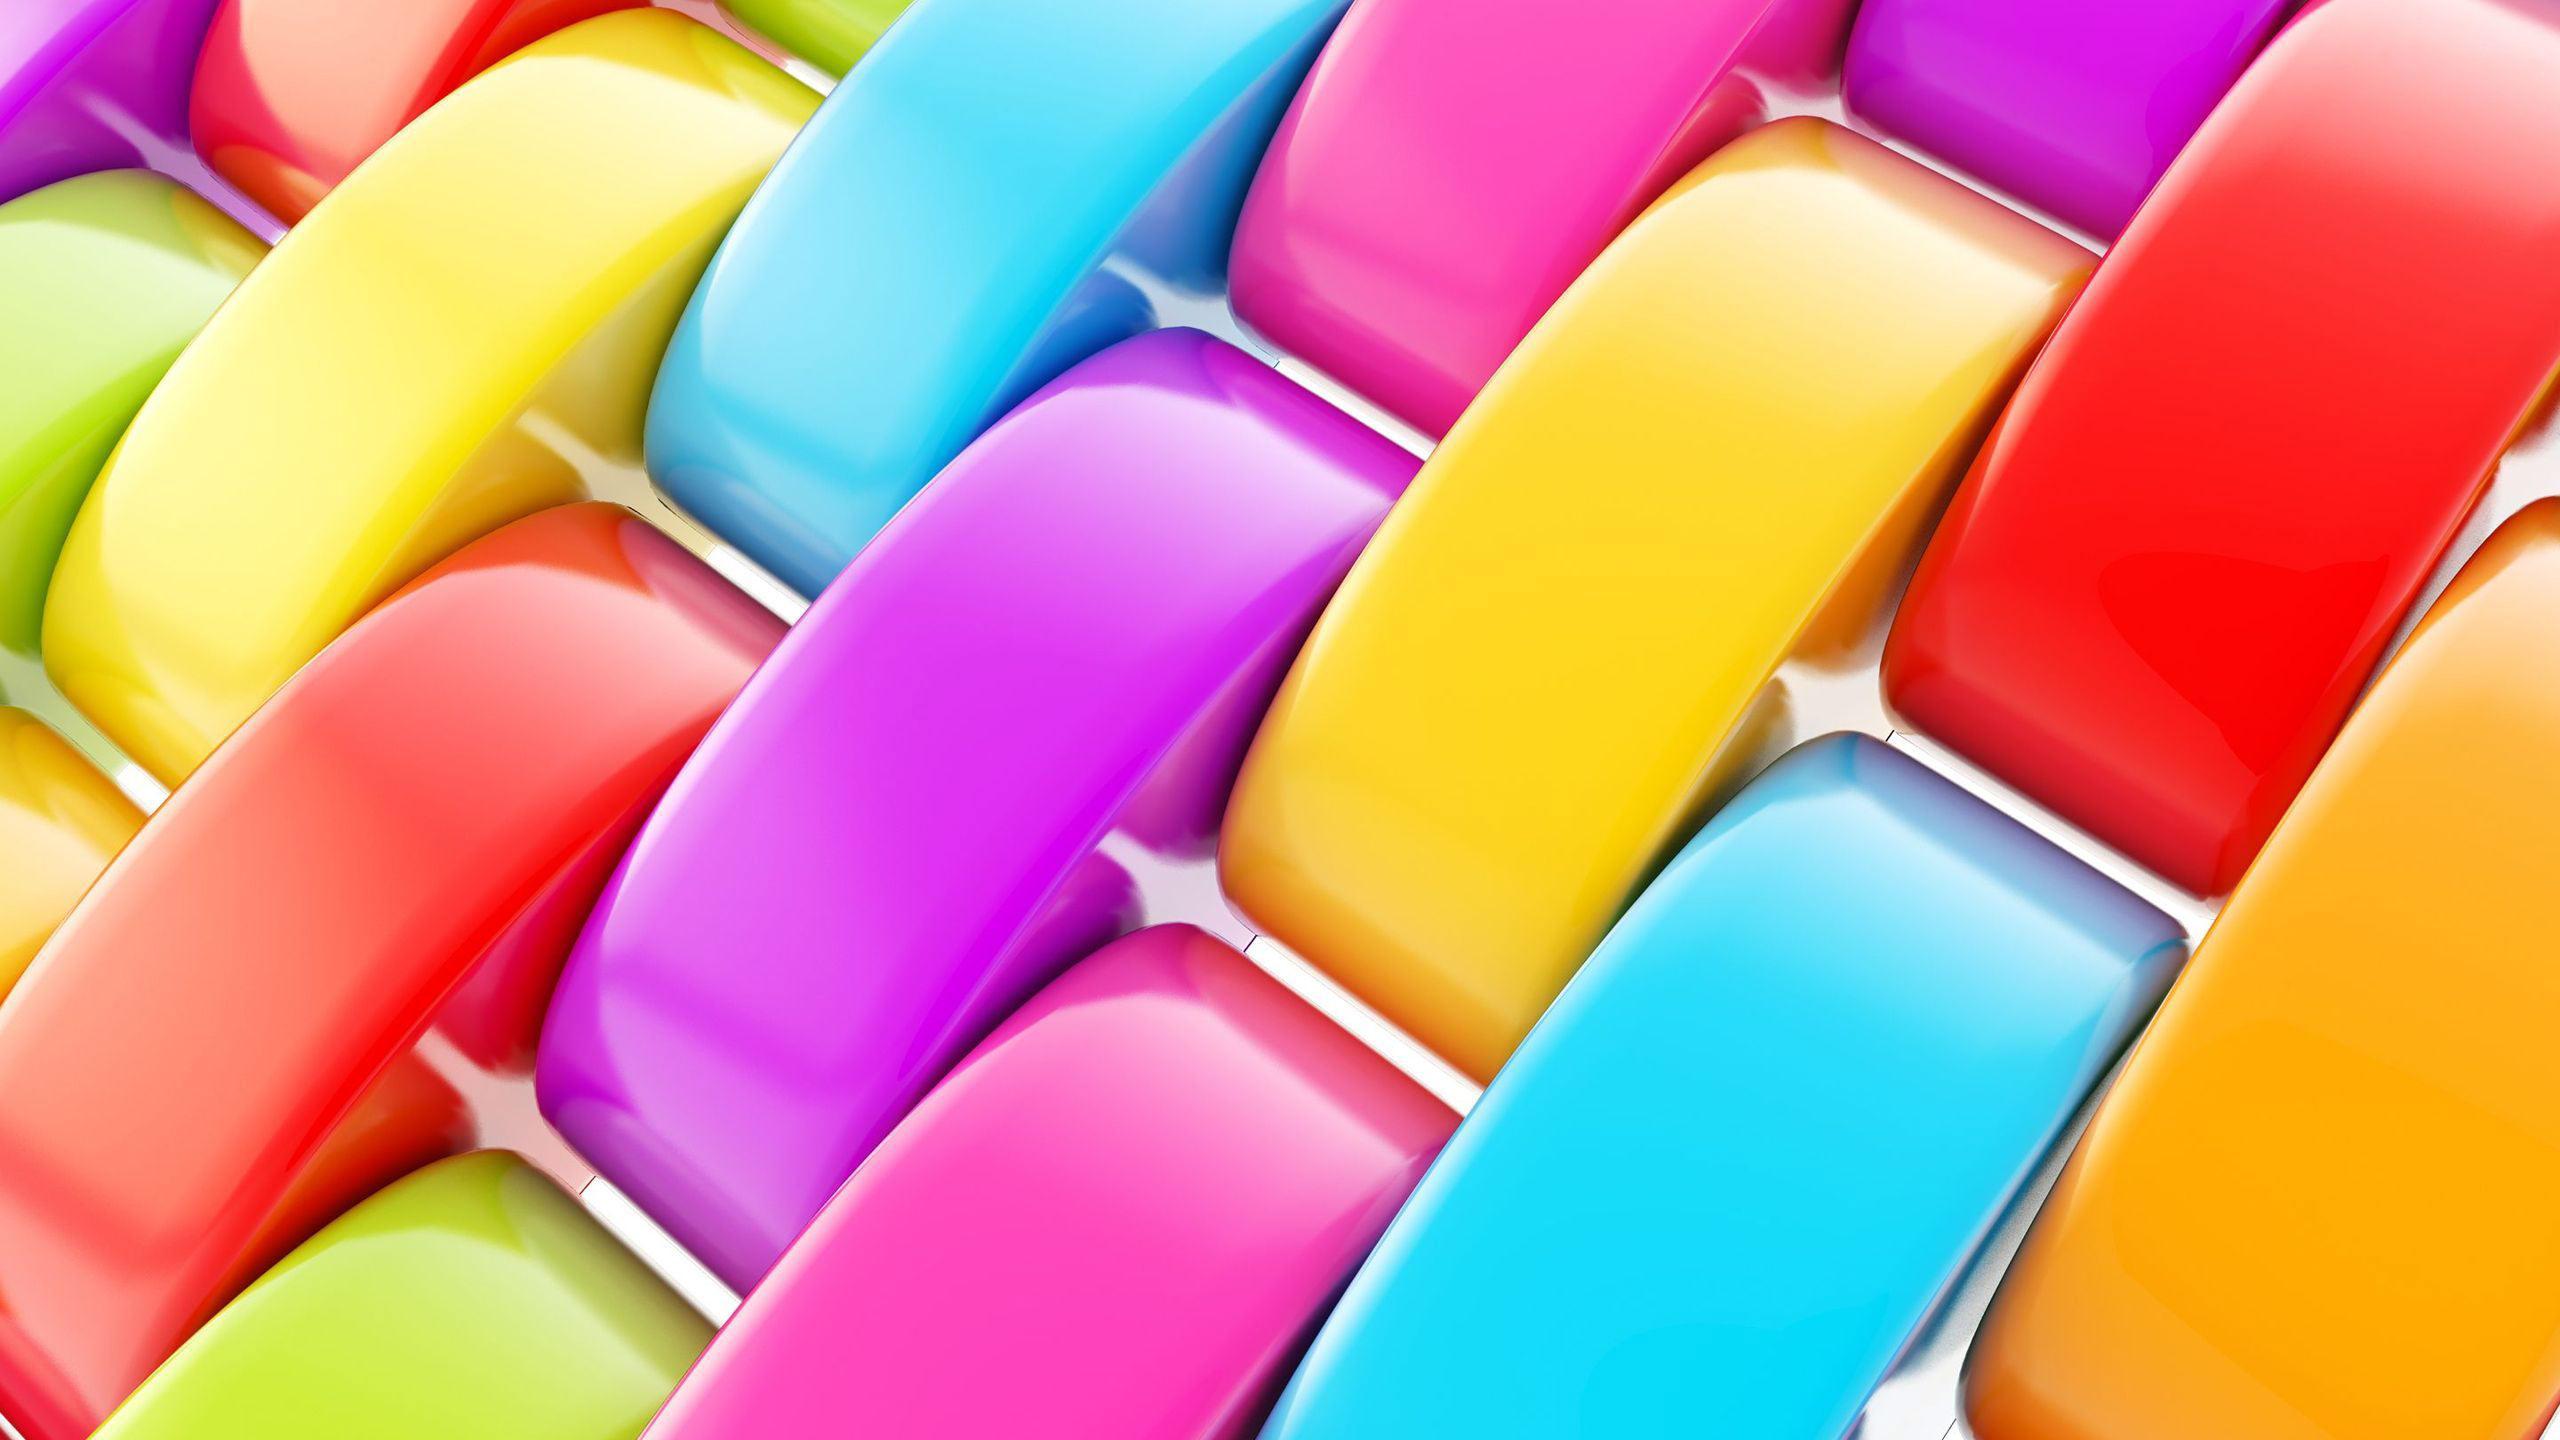 3D Vibrant Colored Rings Wallpaper 2560x1440 PC Wallpaper